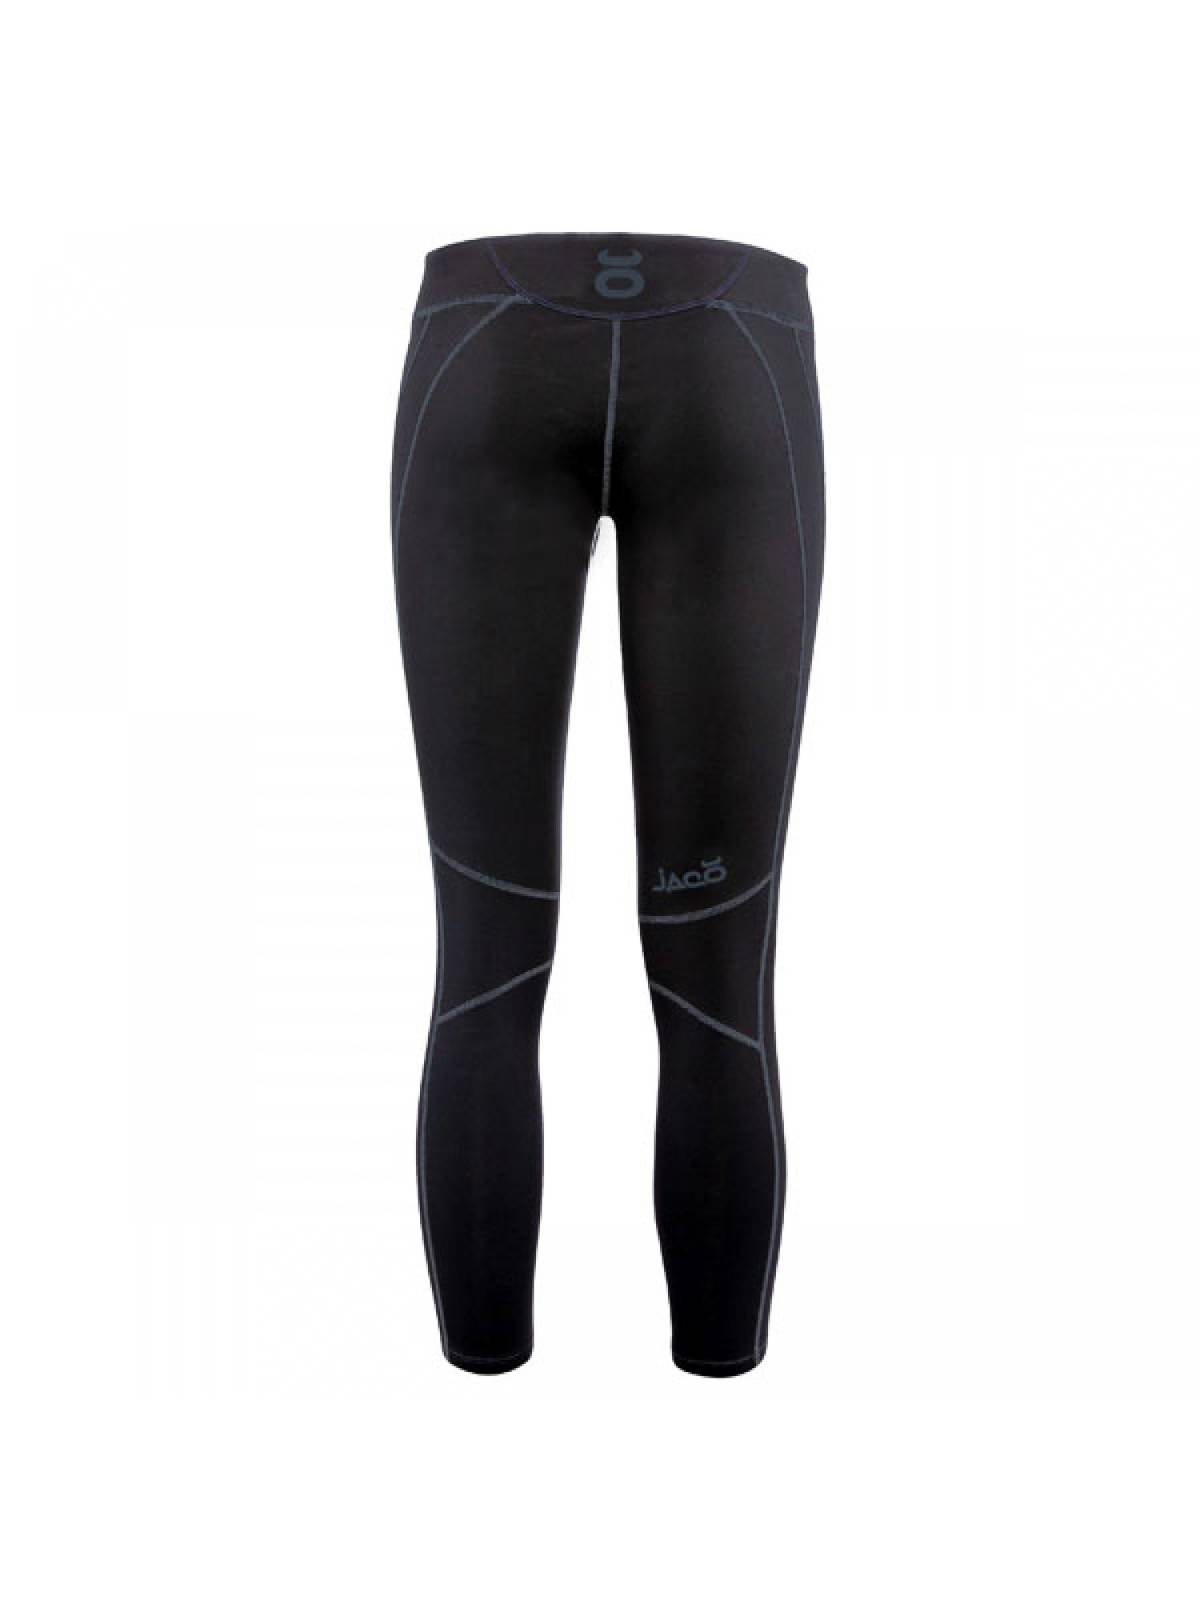 Jaco Athletic Pants for Women, Black Activewear Yoga Pants with Elastic Waistband, Large - image 4 of 5